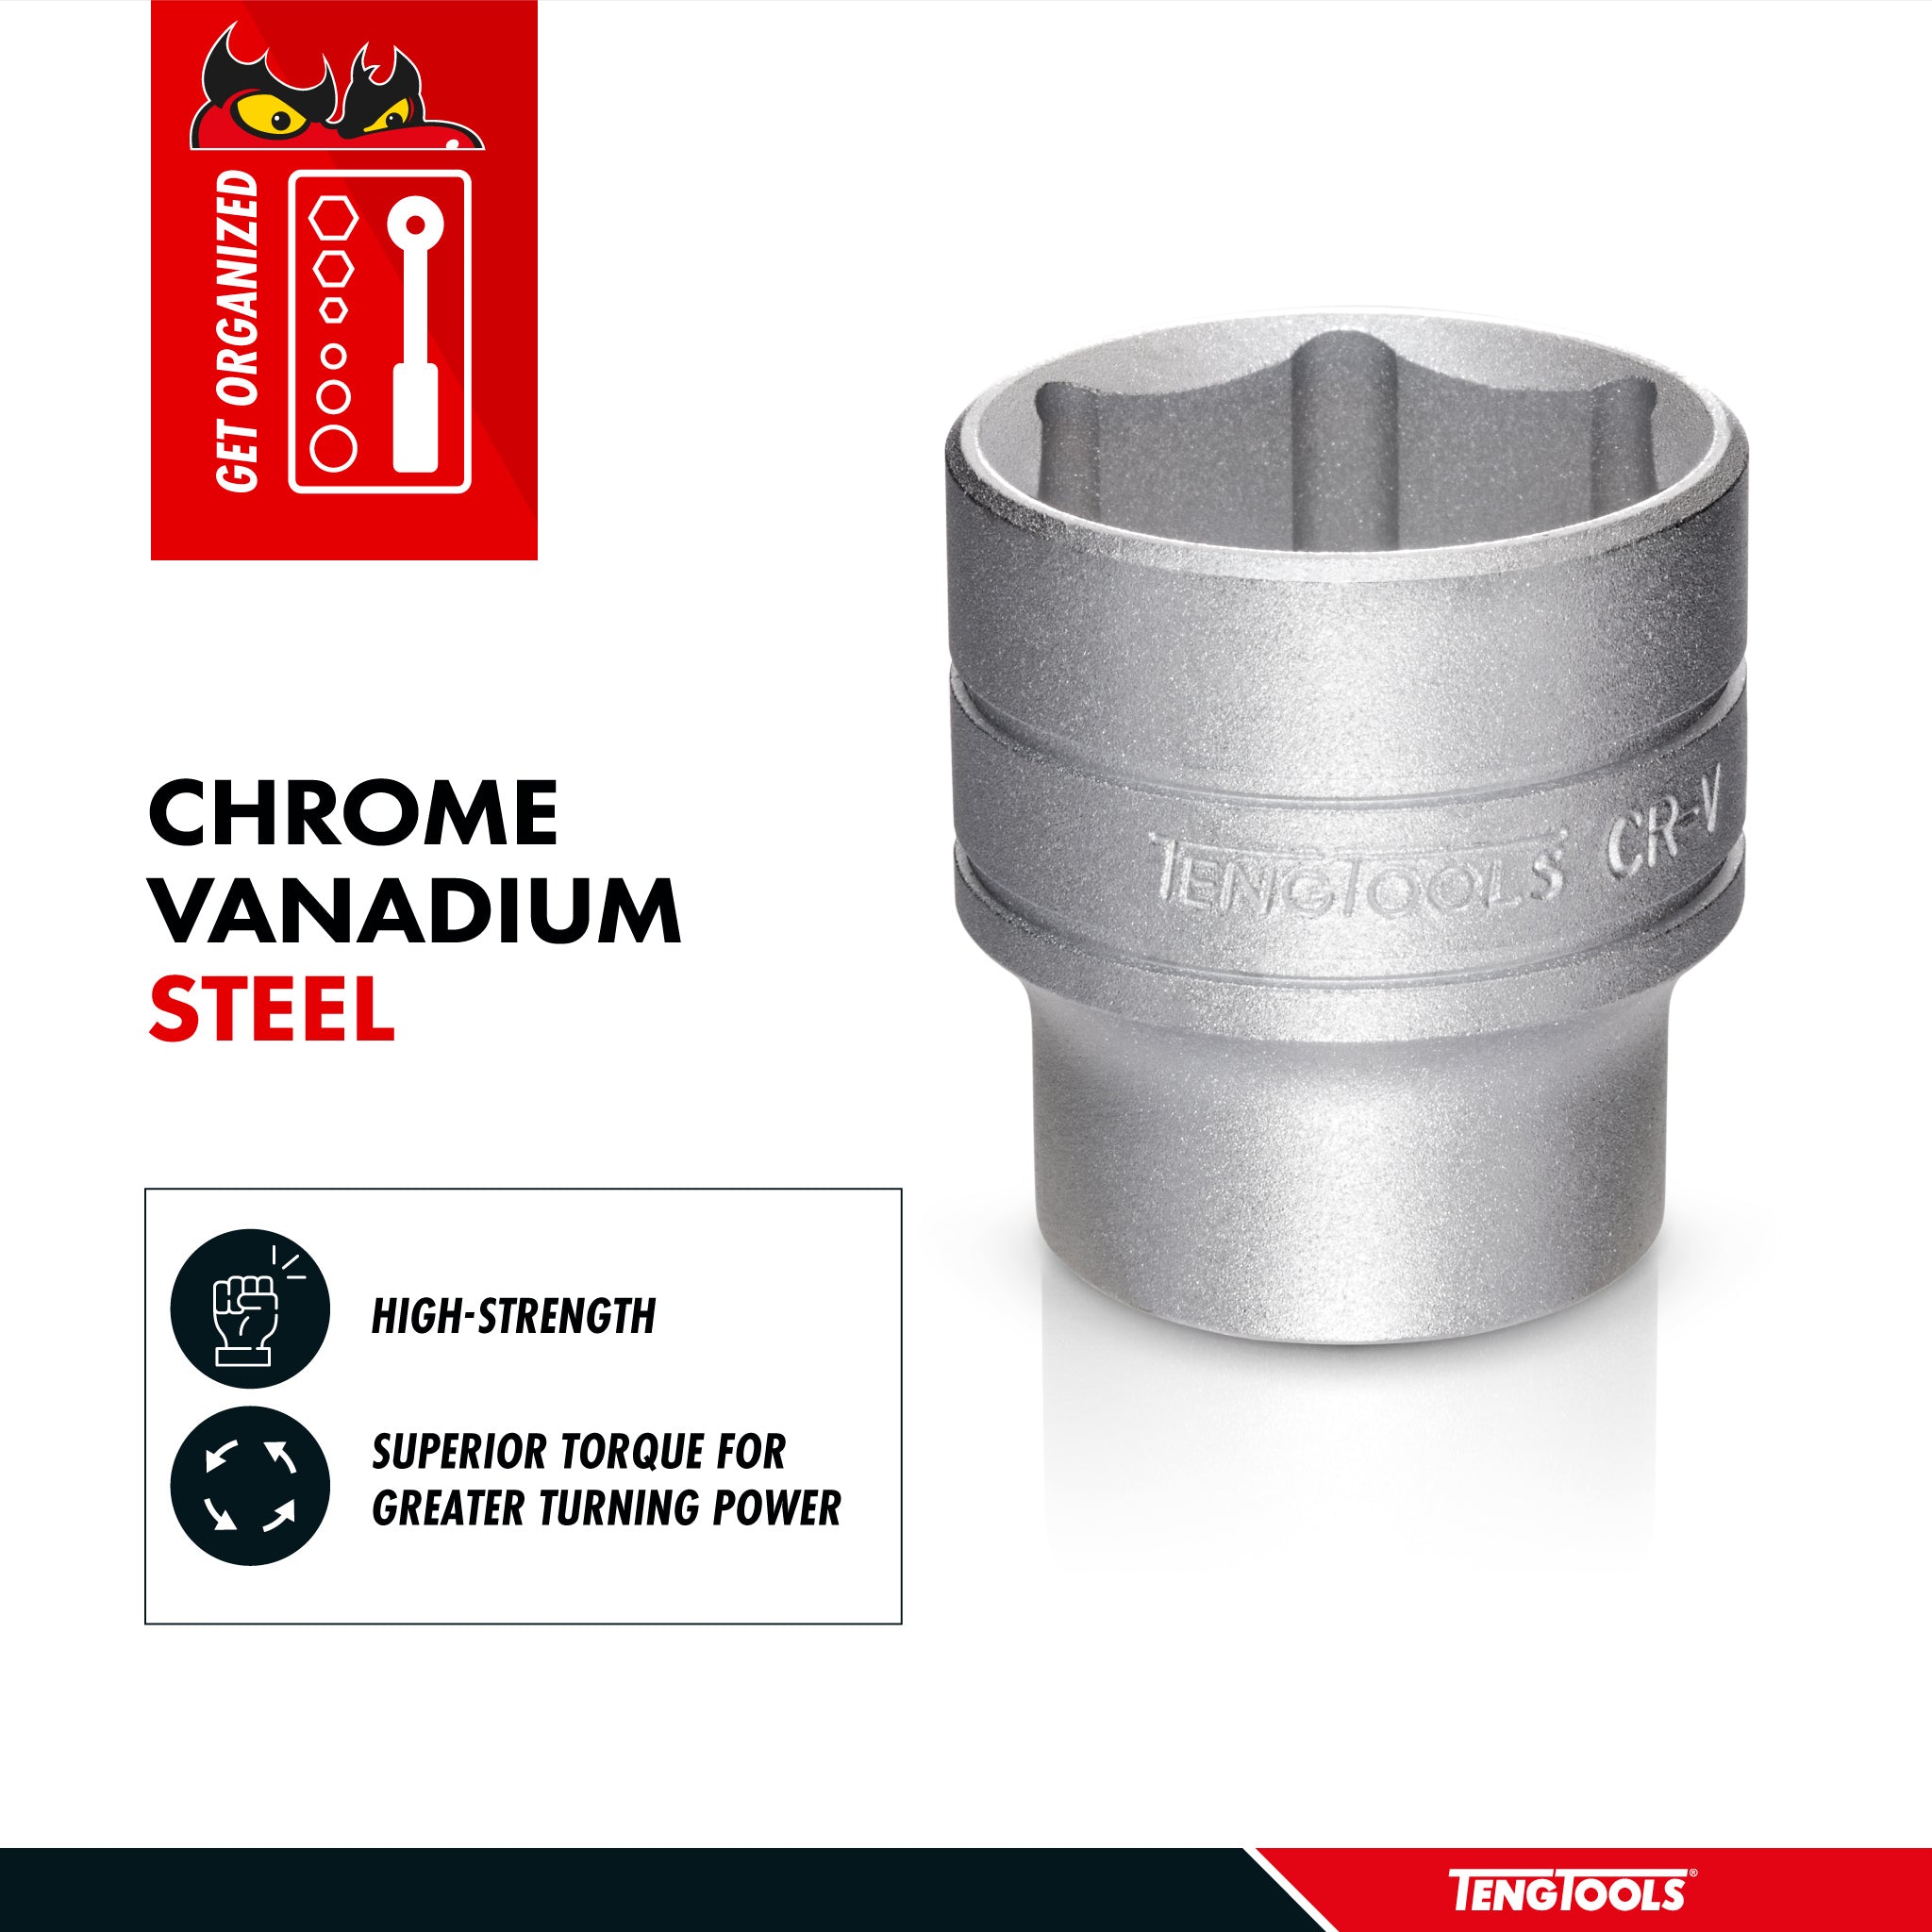 Teng Tools 6 Point SAE Shallow 3/8 Inch Drive Chrome Vanadium Sockets - 3/8